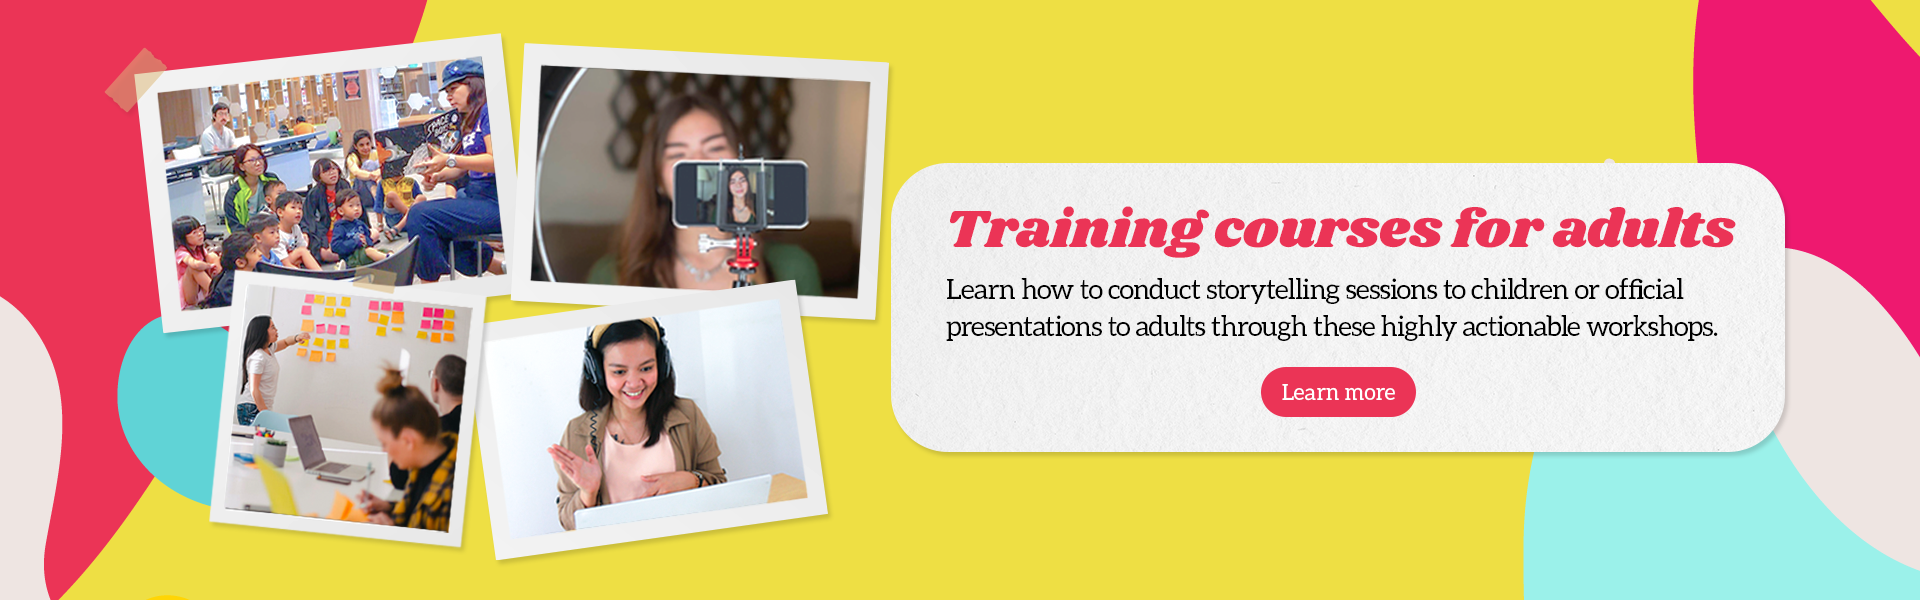 Presentation Training Asians on Video Calls